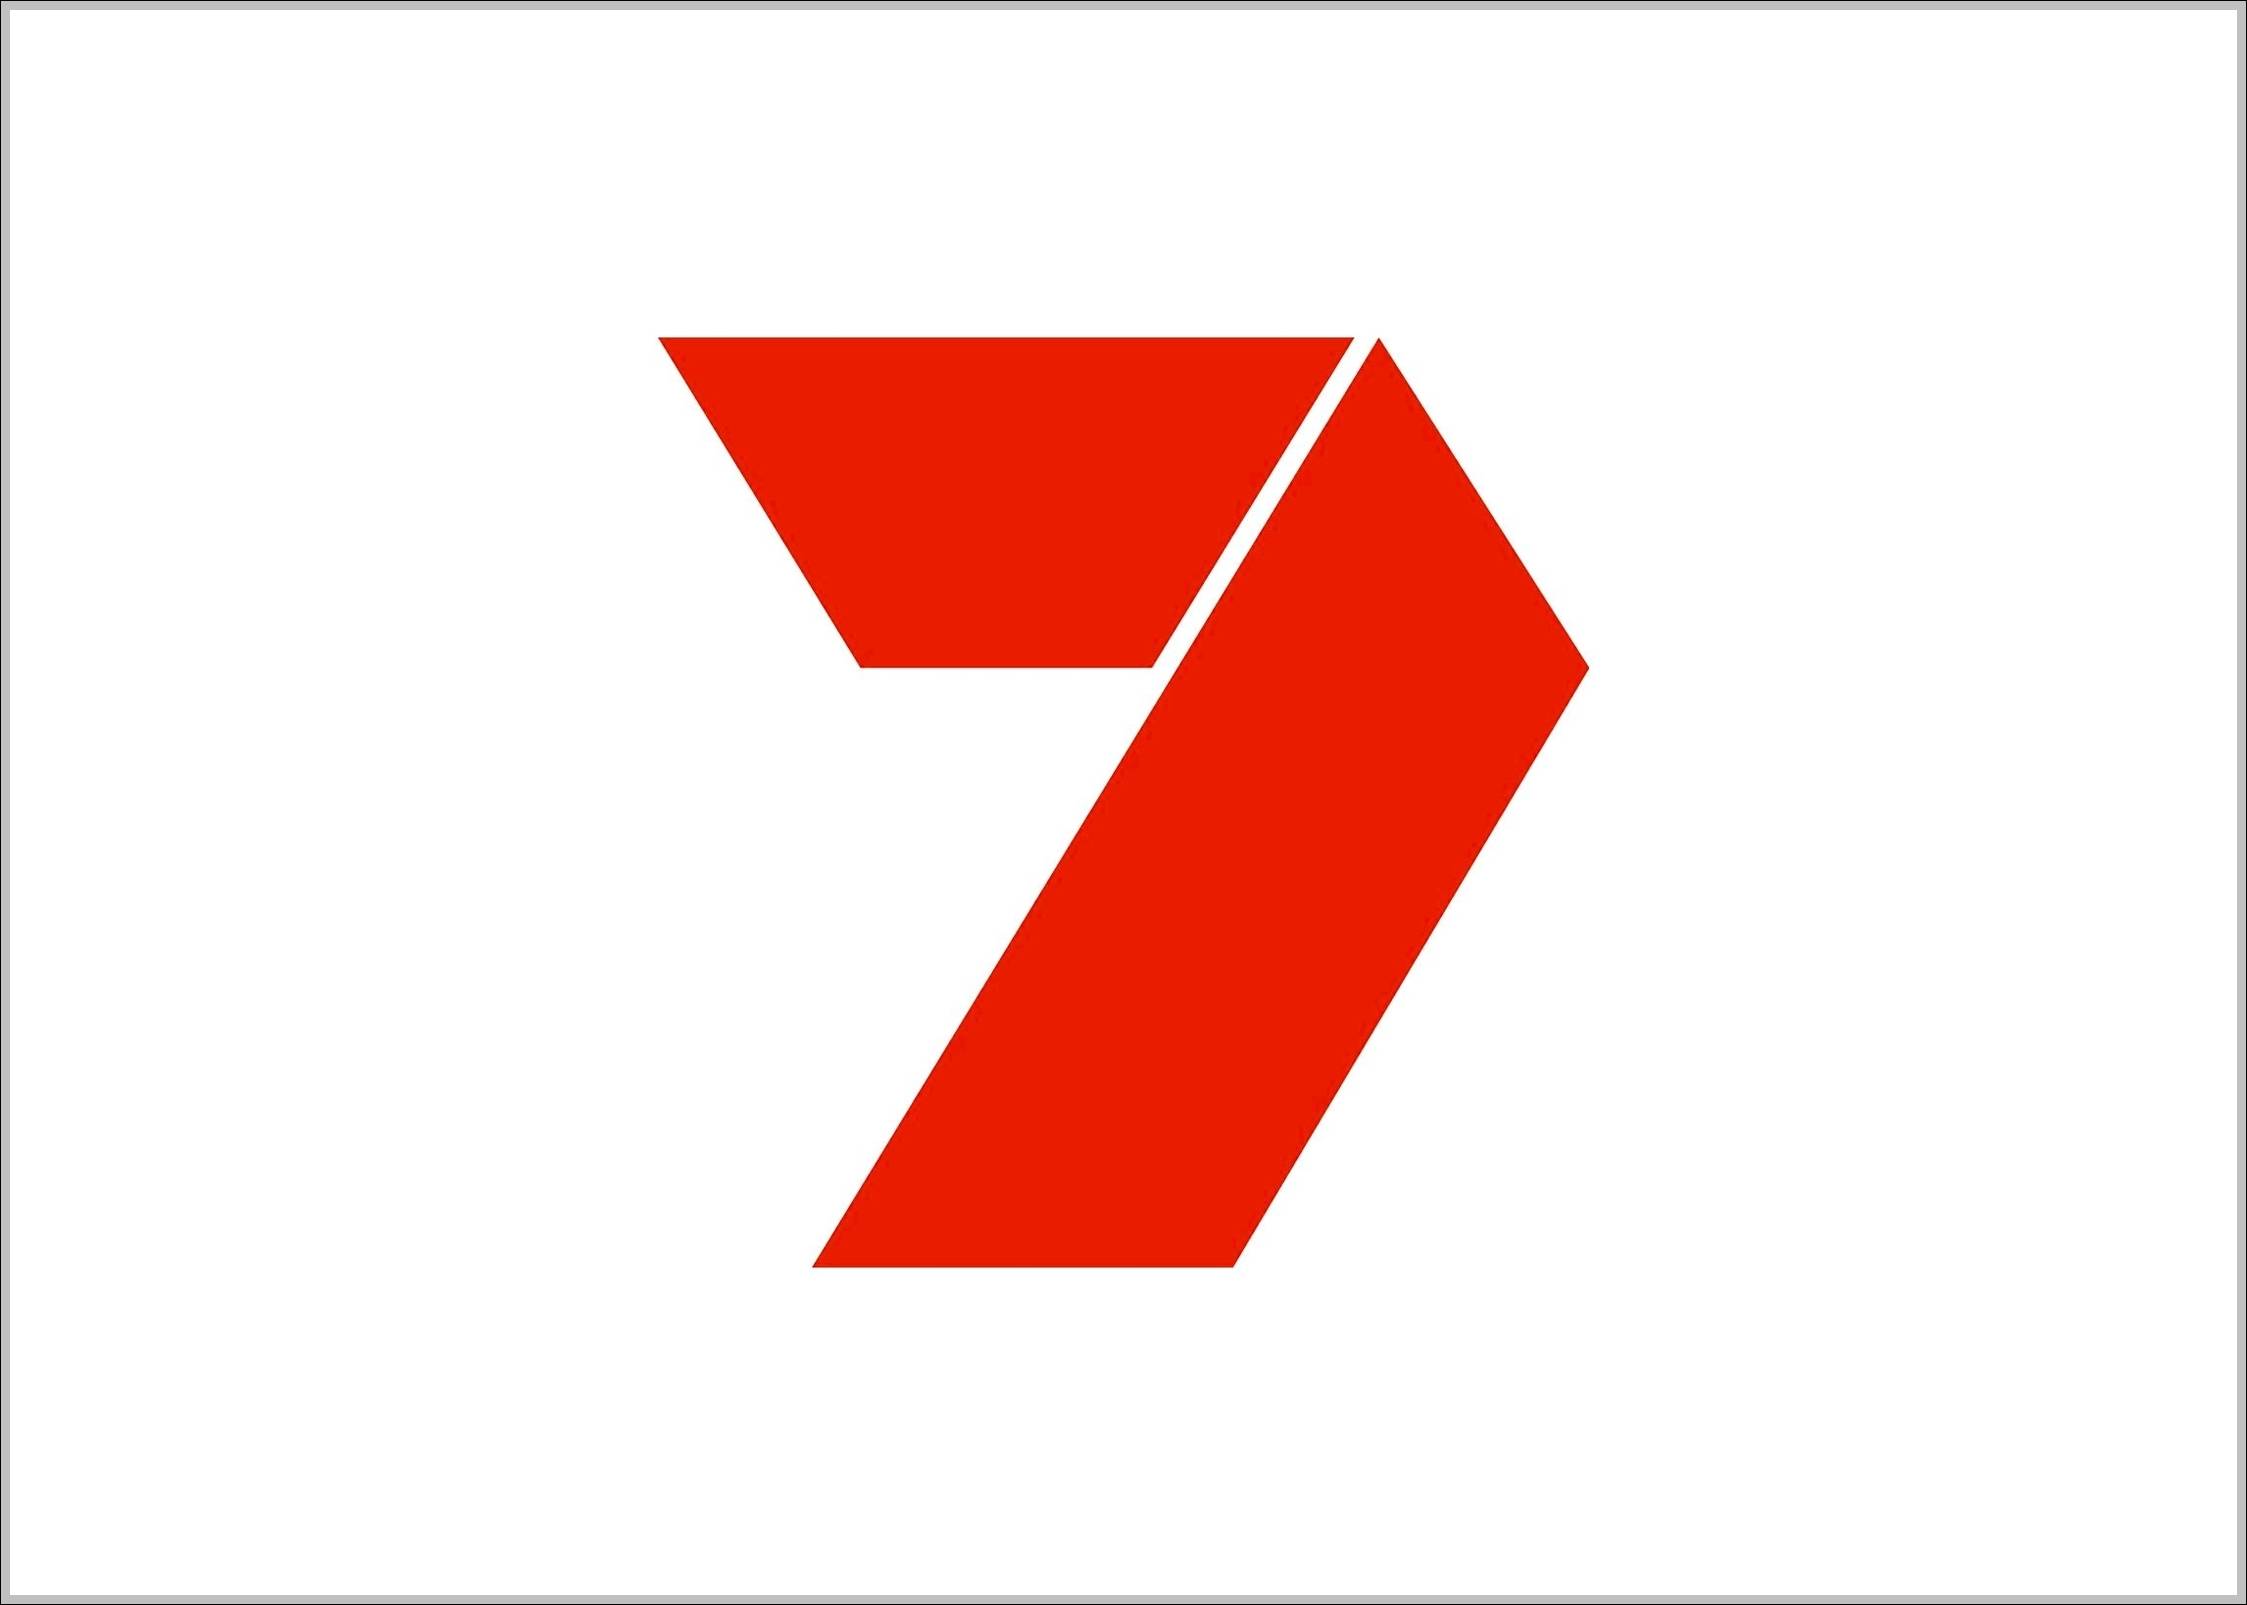 Seven Network logo